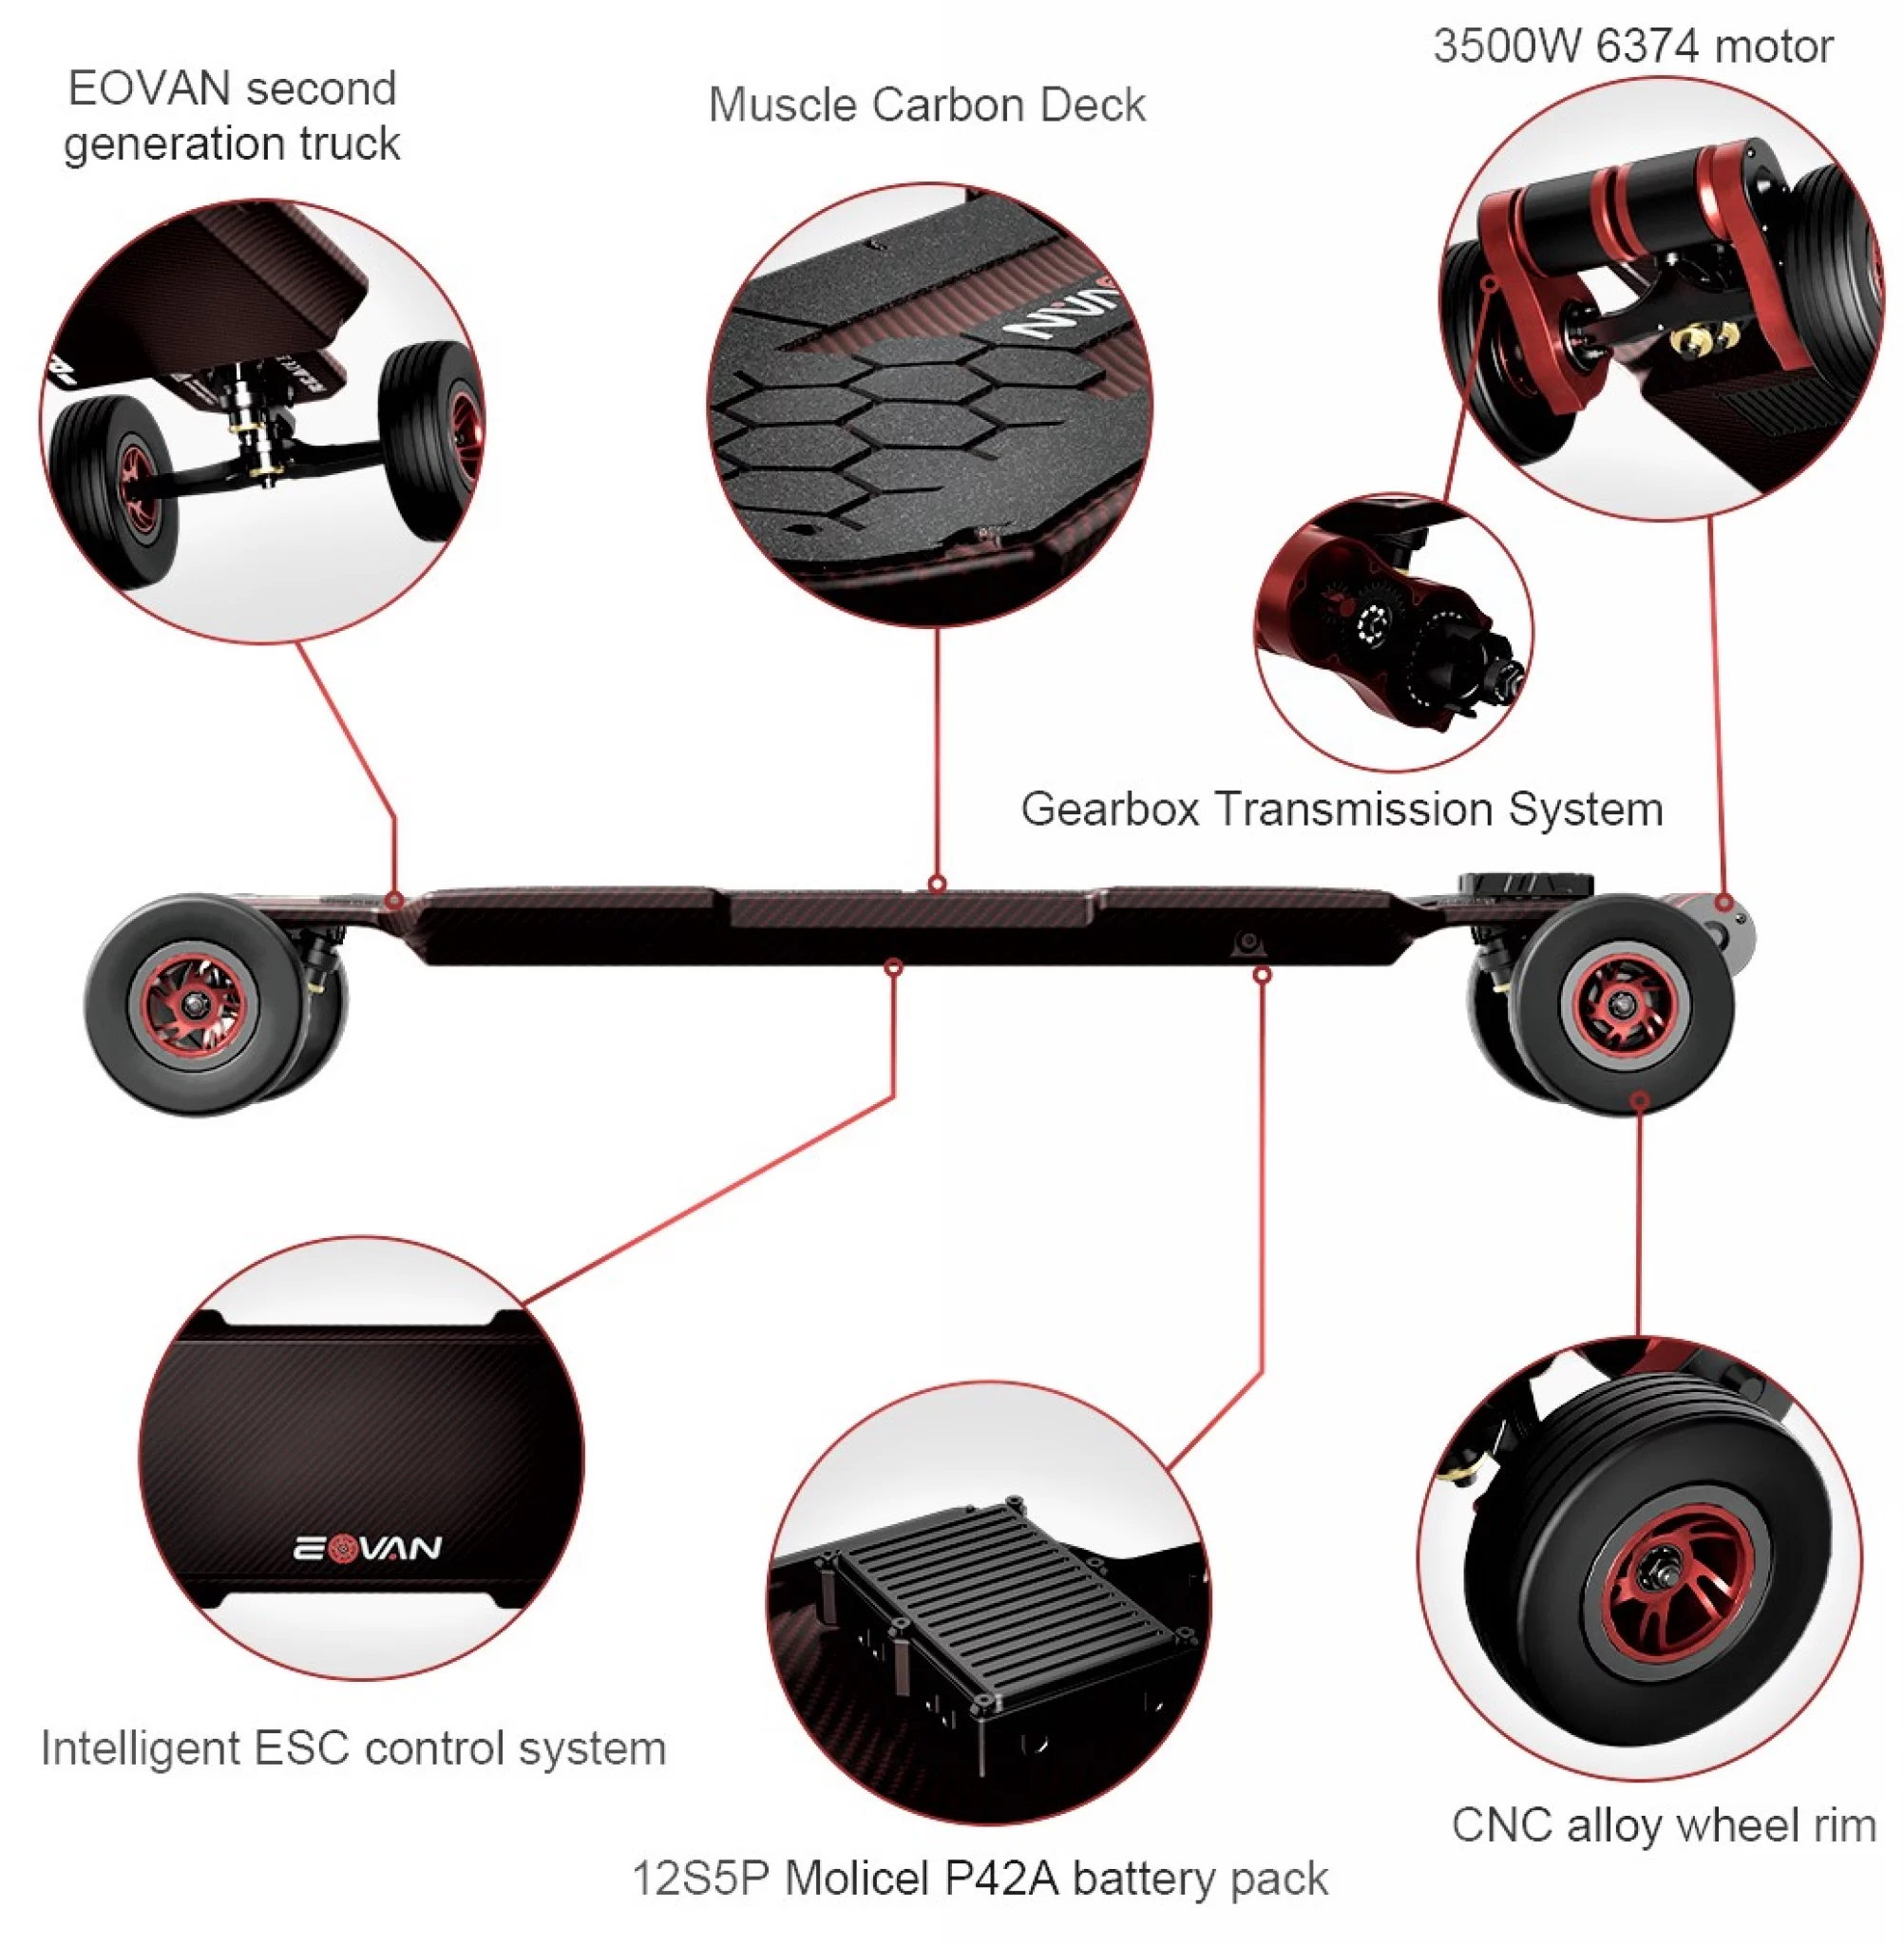 Eovan GTO Silo Skateboard Features